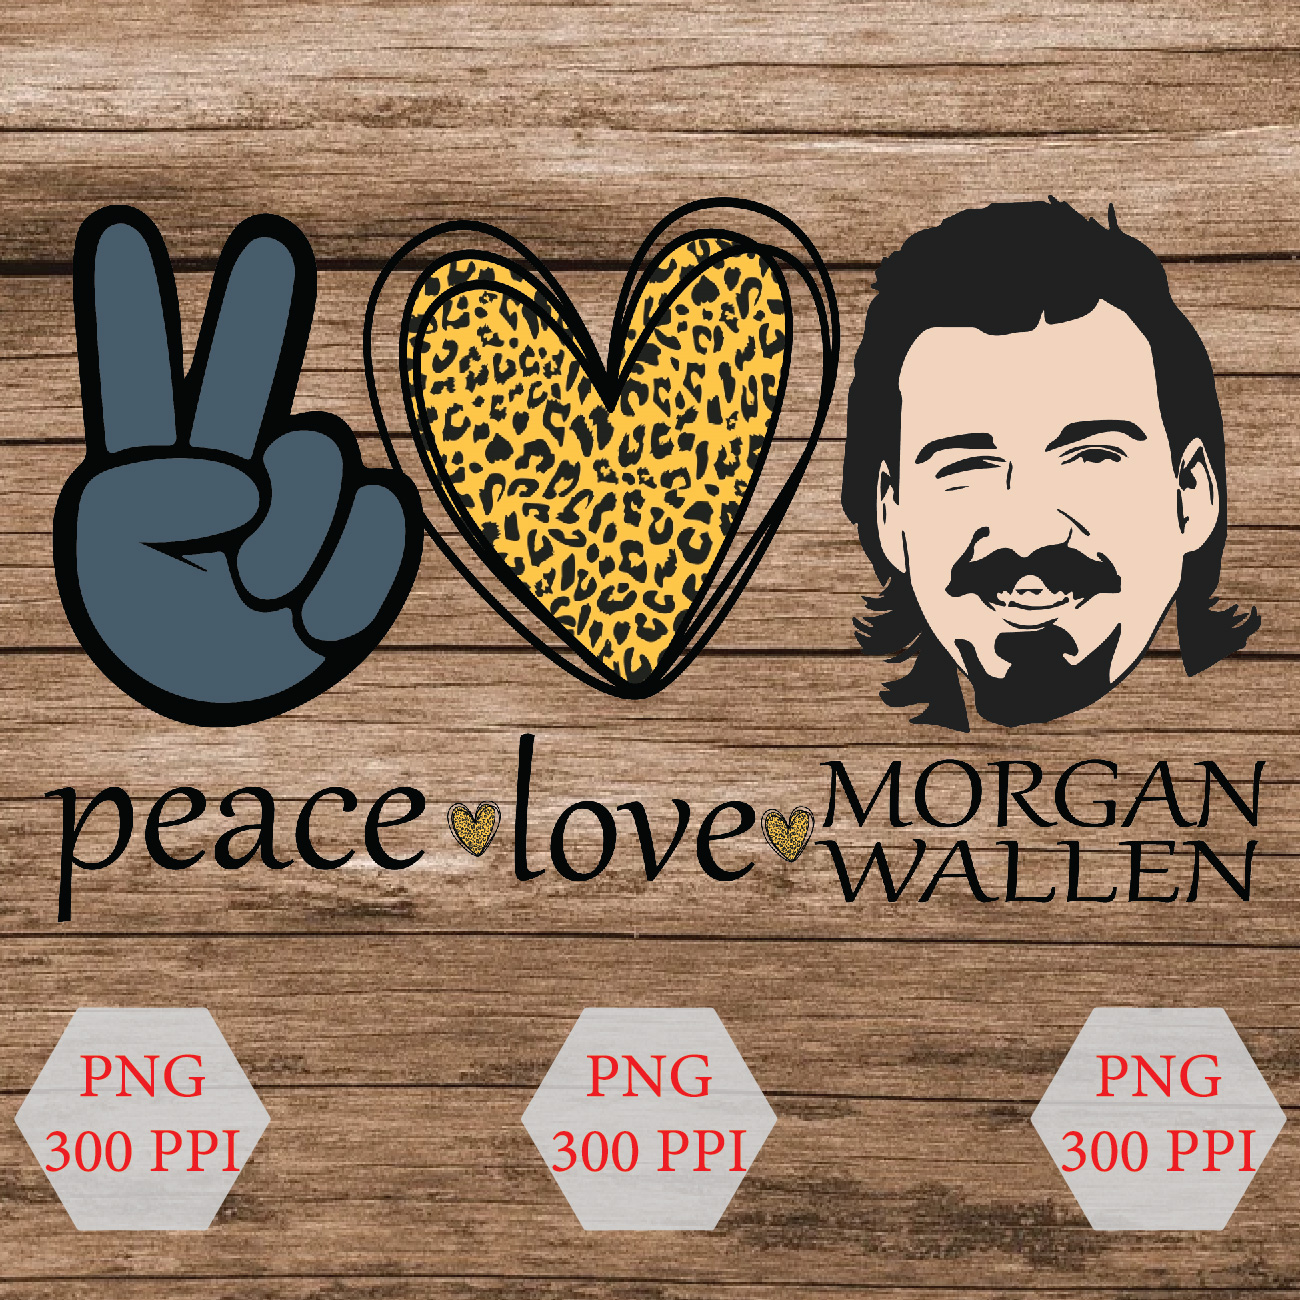 Download Peace Love Morgan Wallen Country Music Singer Artist Sublimation Transfer Png File Instant Digital Download Only Designbtf Com